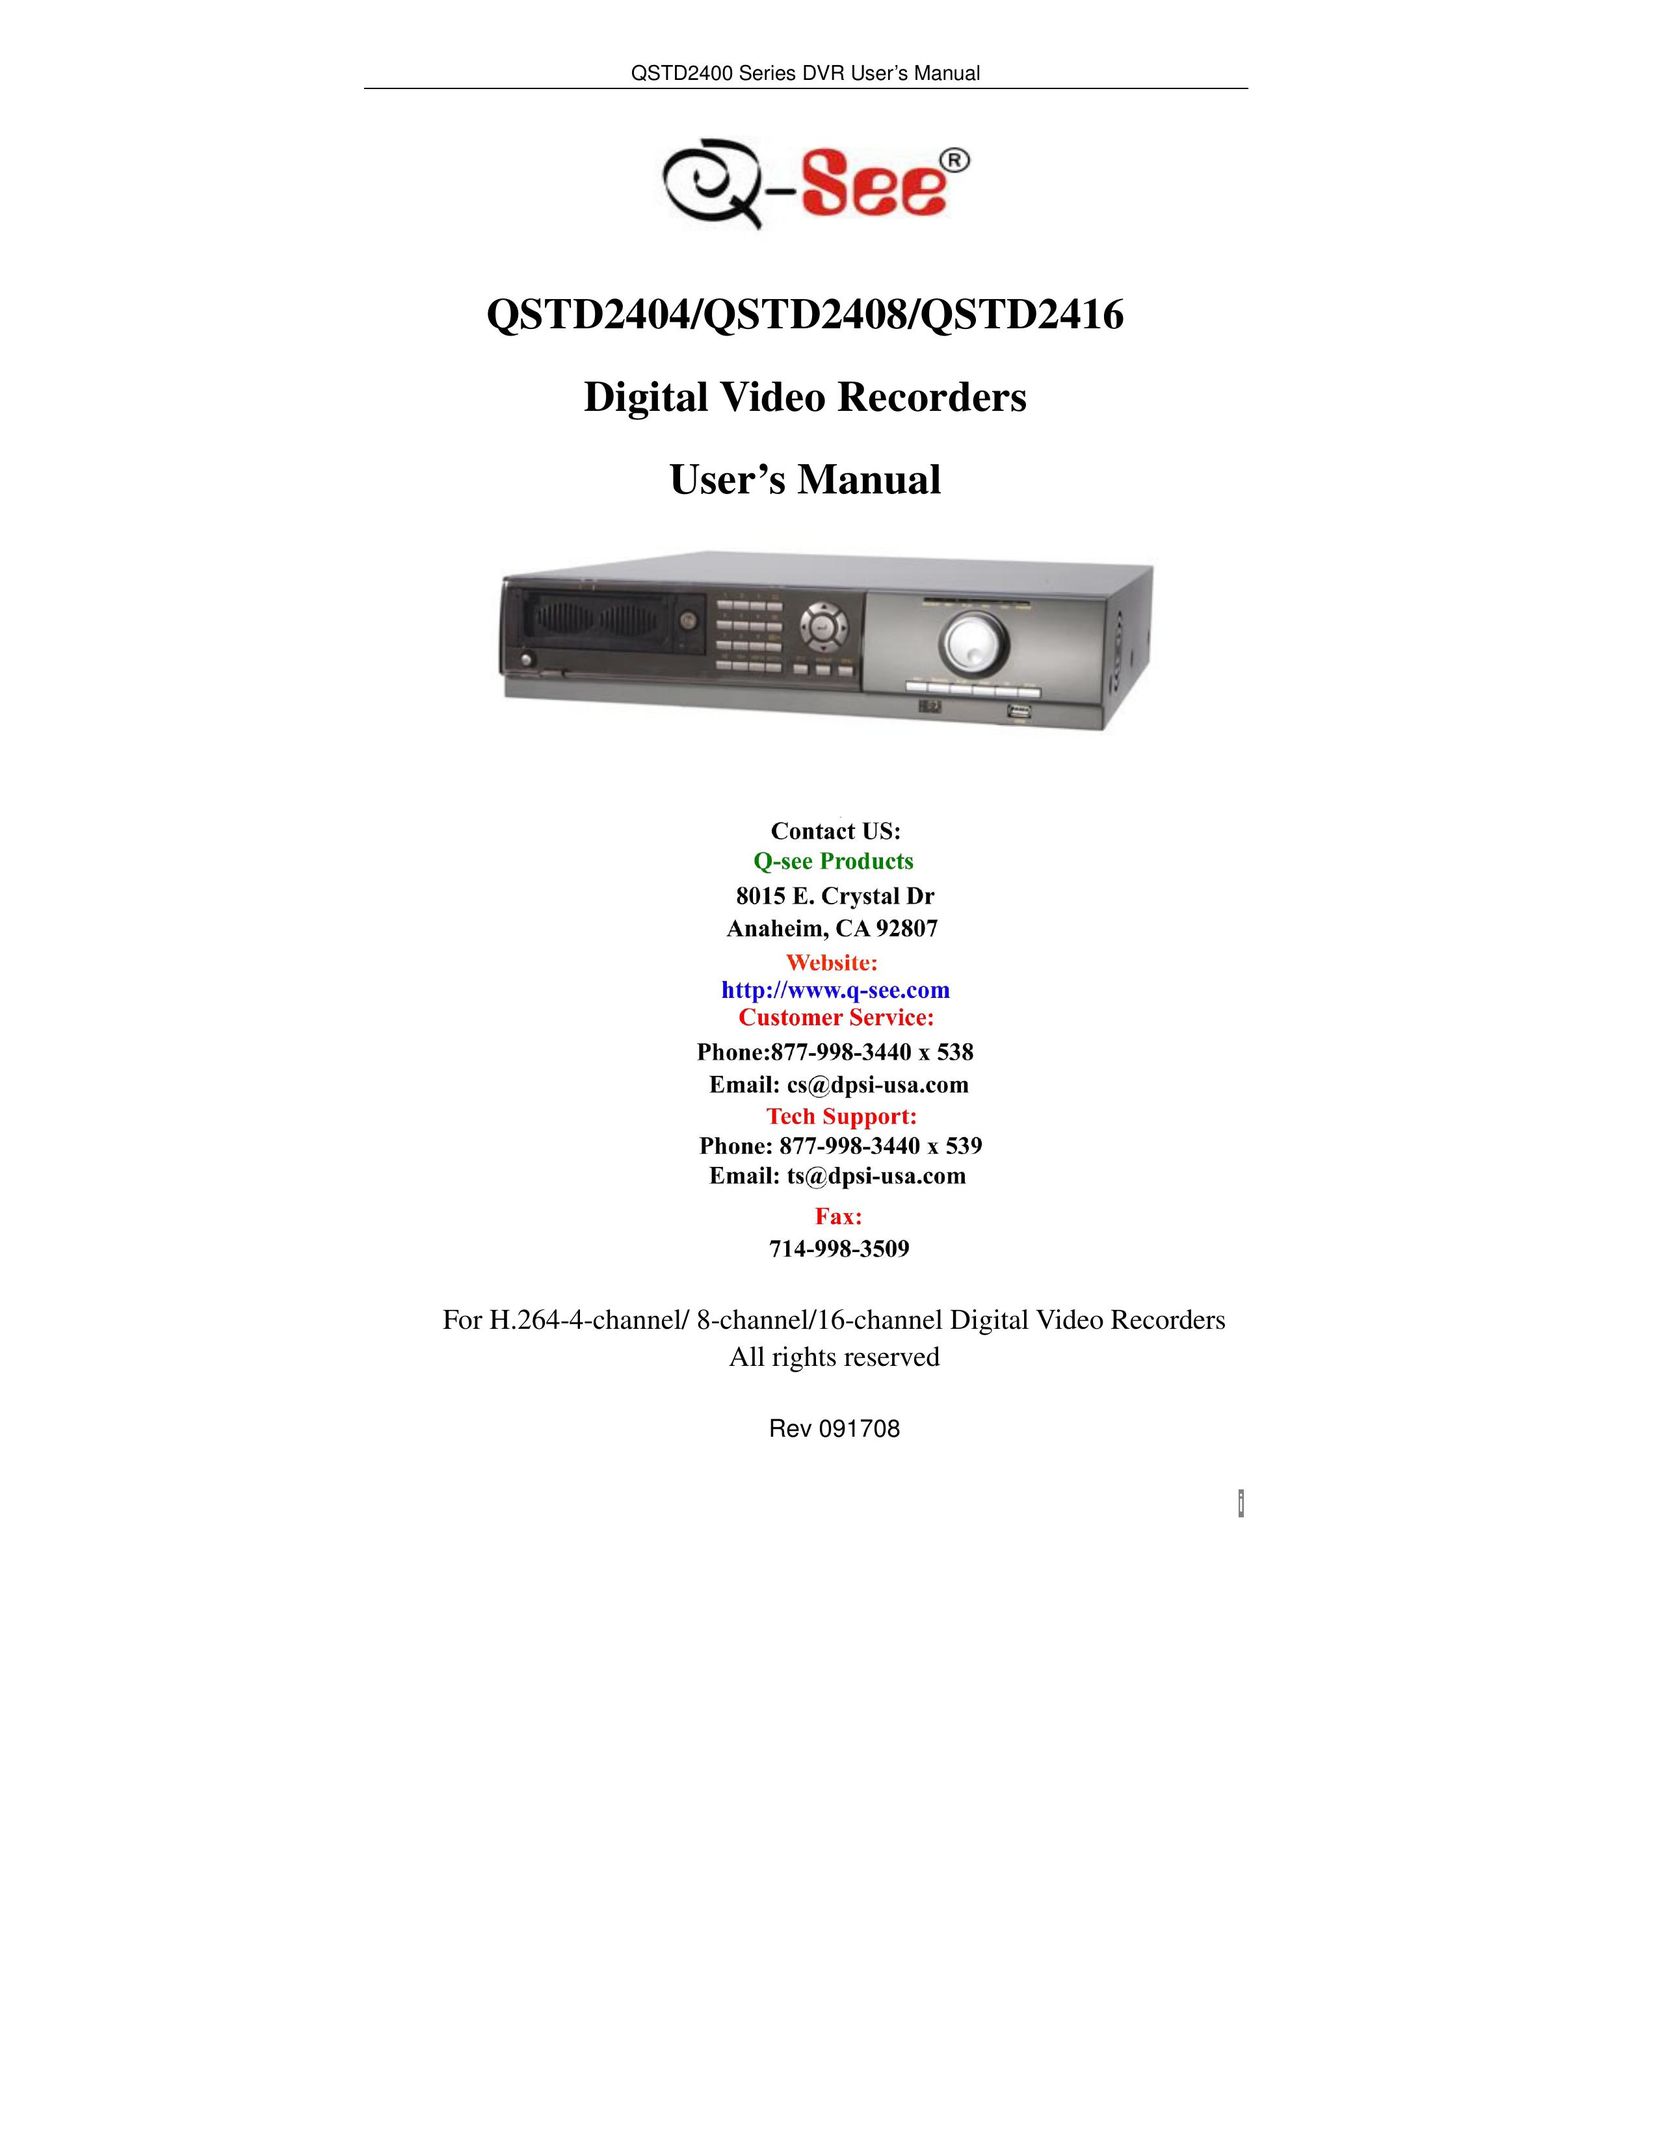 Q-See QSTD2408 DVR User Manual